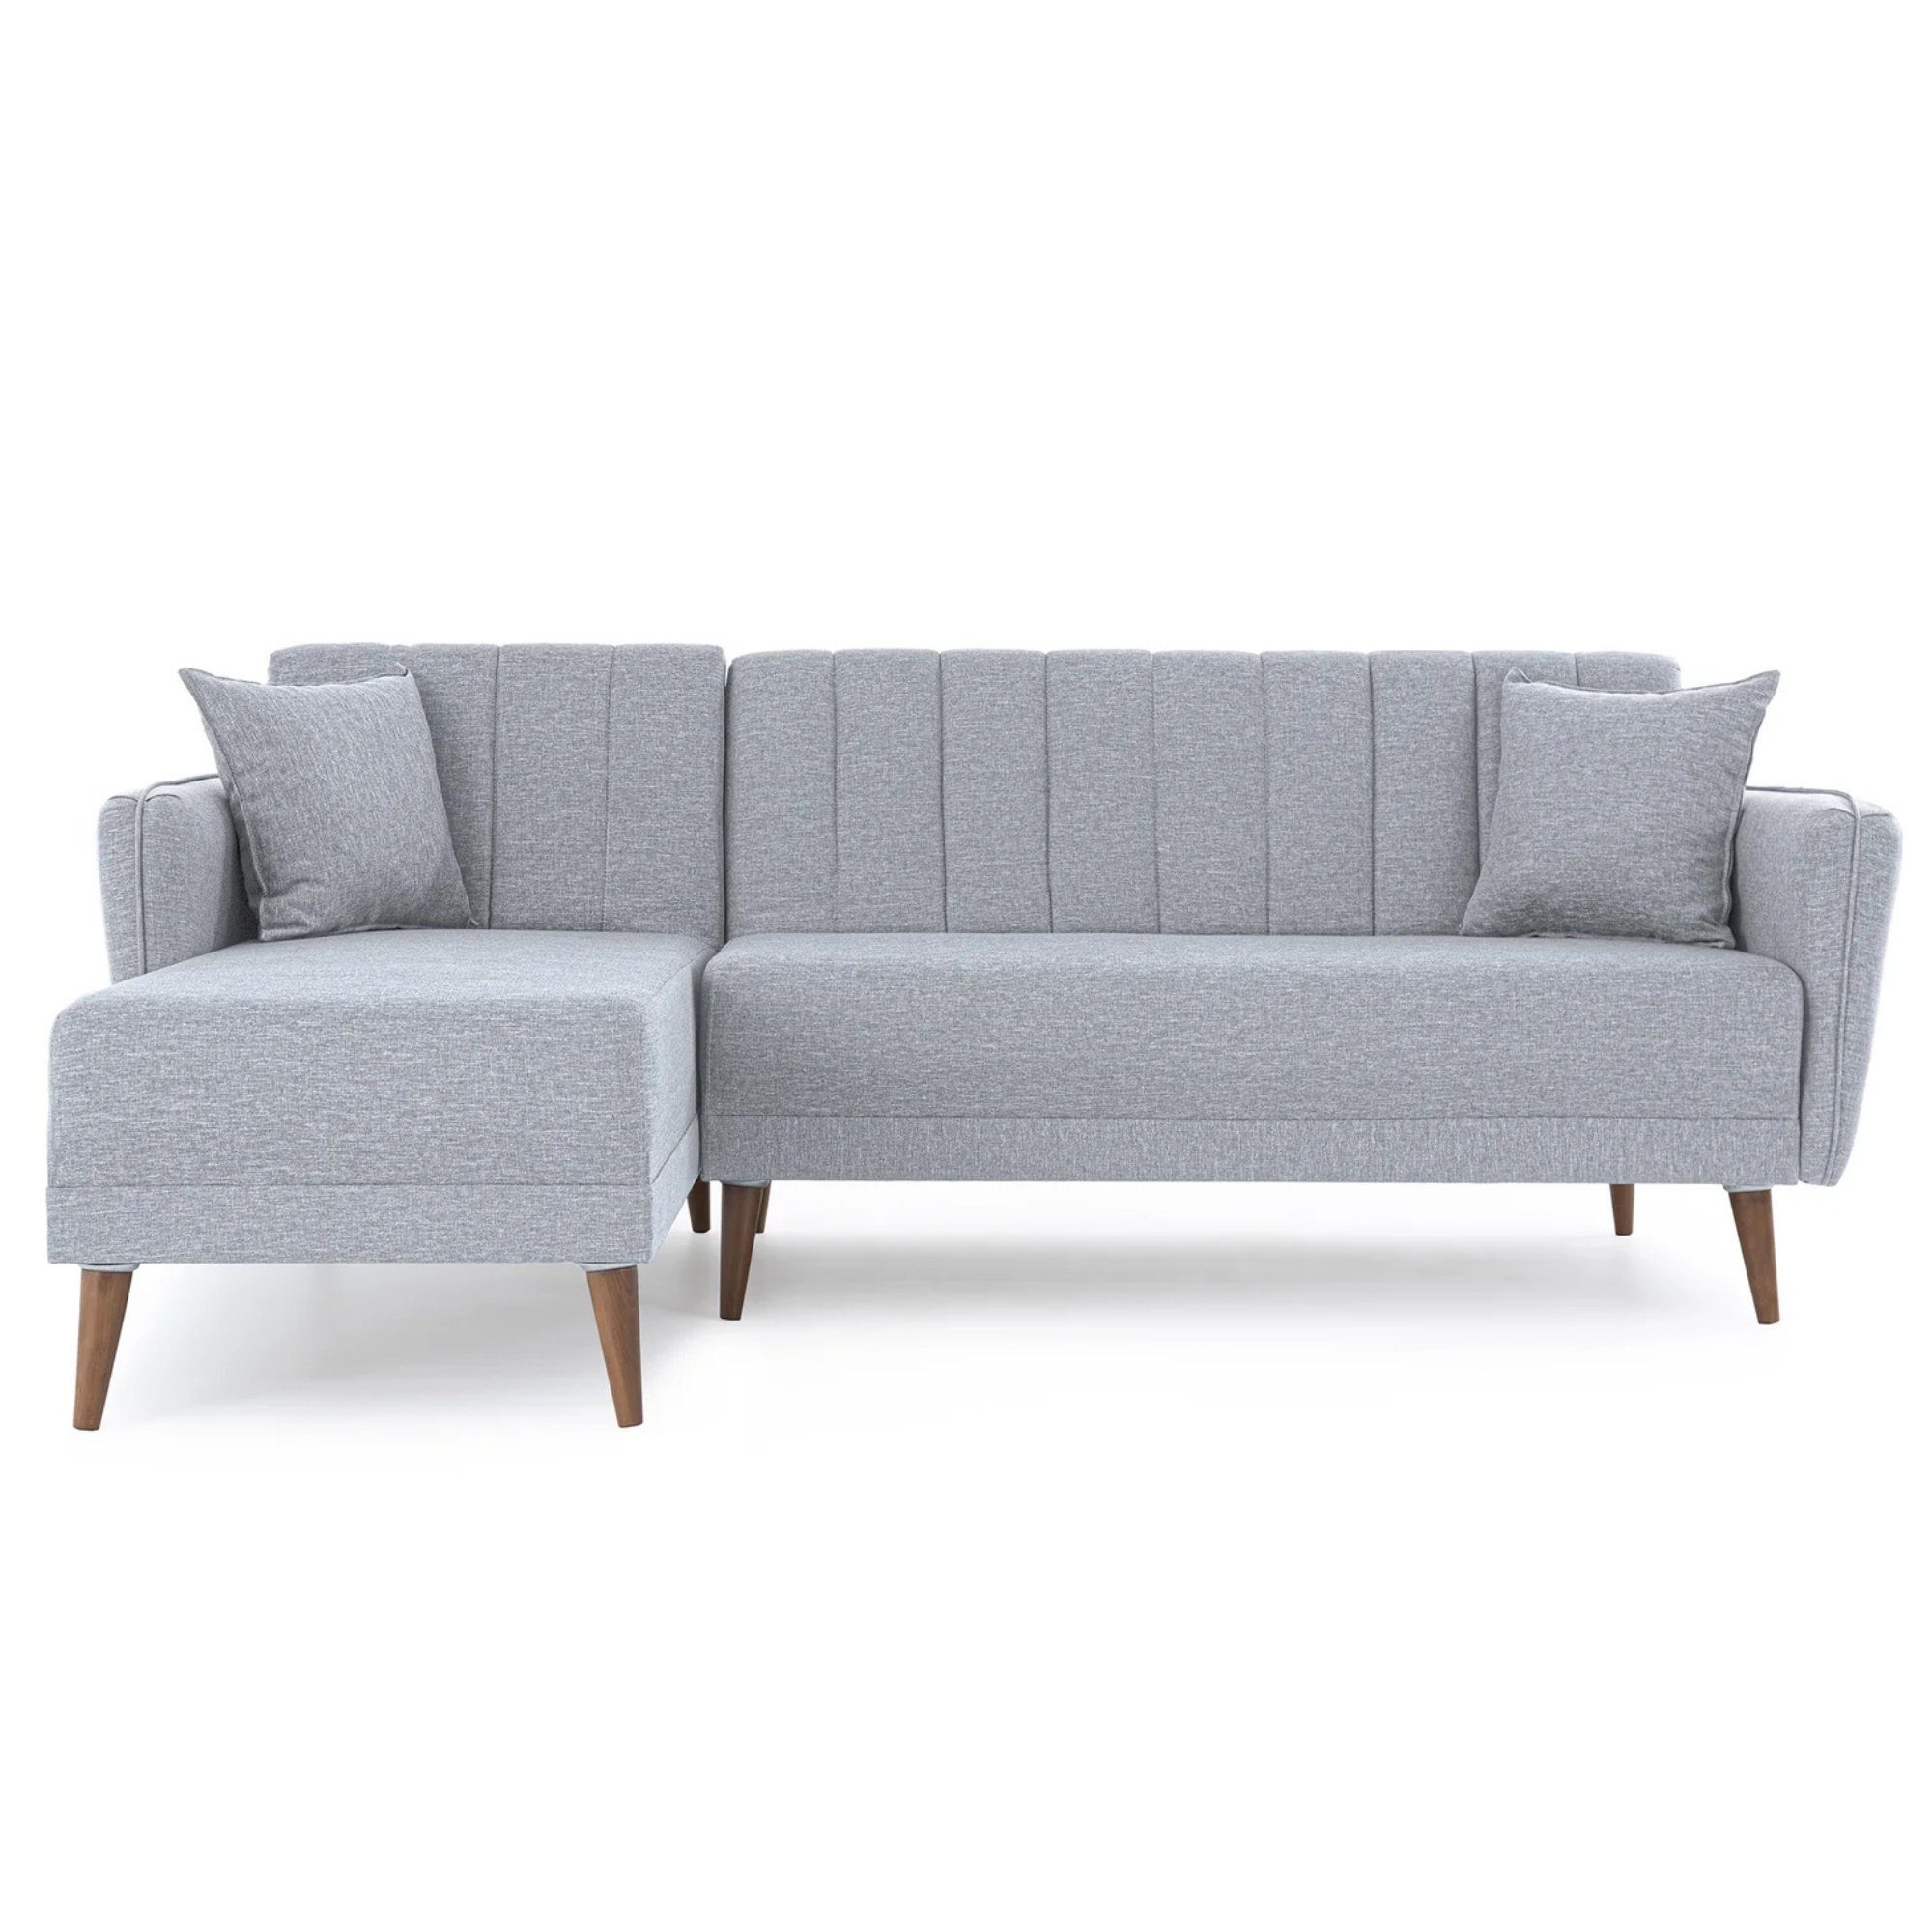 Gozos Ecksofa Gozos Mammo Sitzgruppe Ecksofa, Bettfunktion Couch, 225 x 150 x 85 cm, mit Relaxfunktion Grau